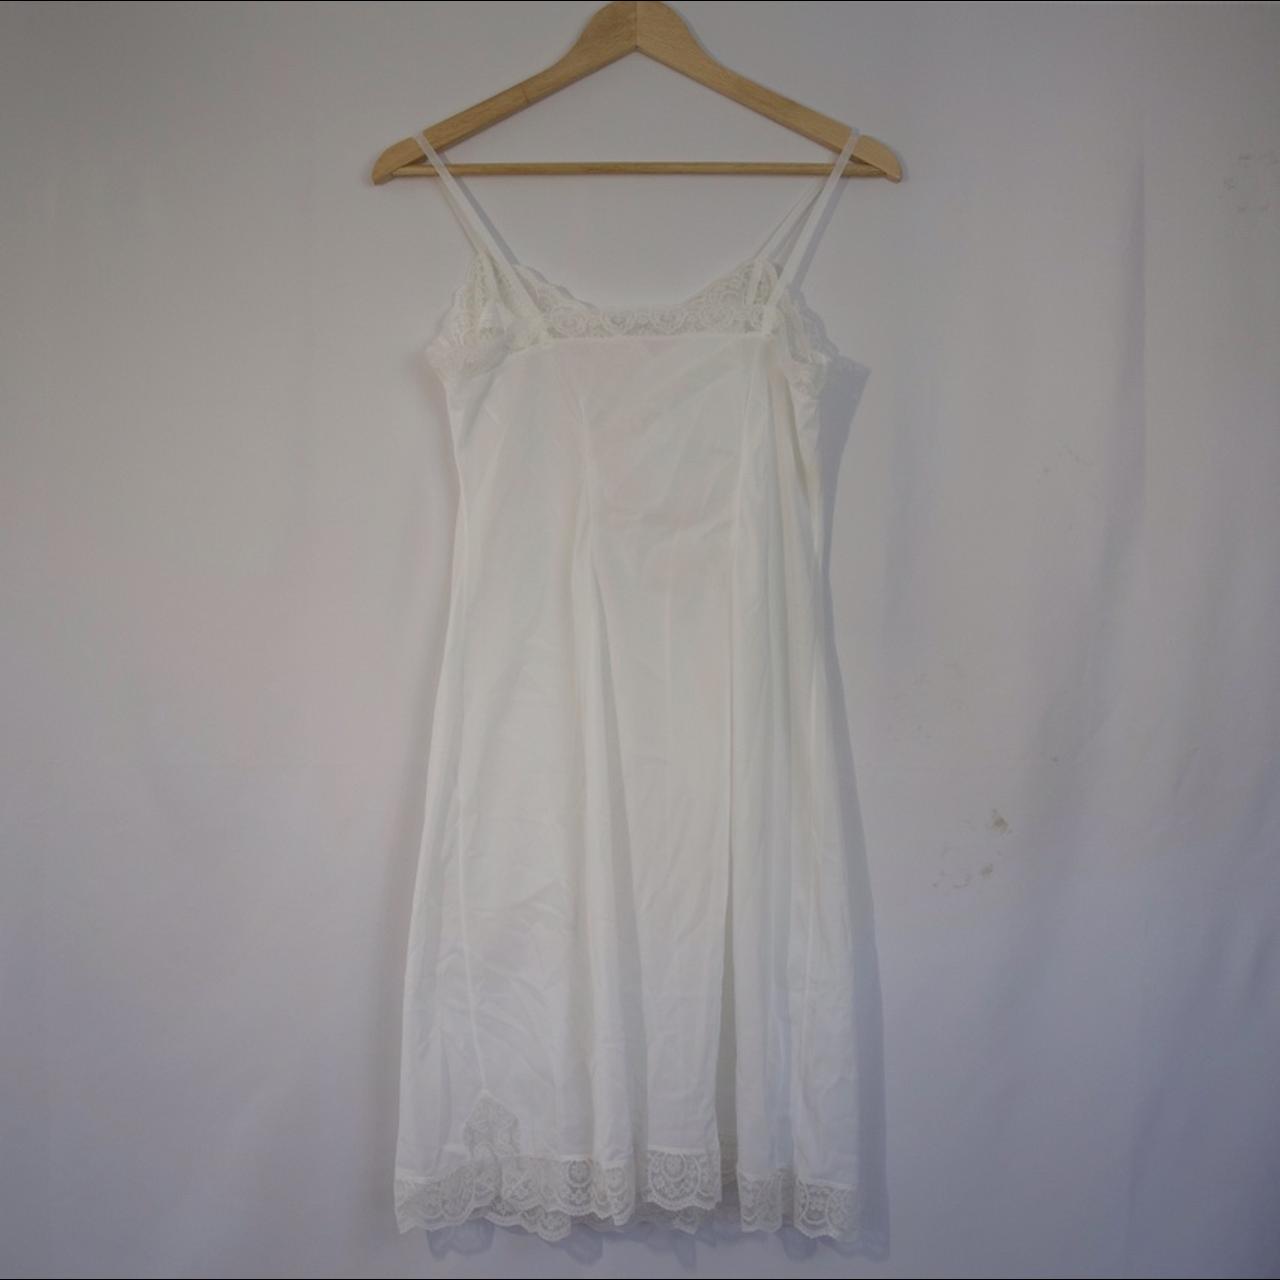 Vintage white lace slip dress from... - Depop